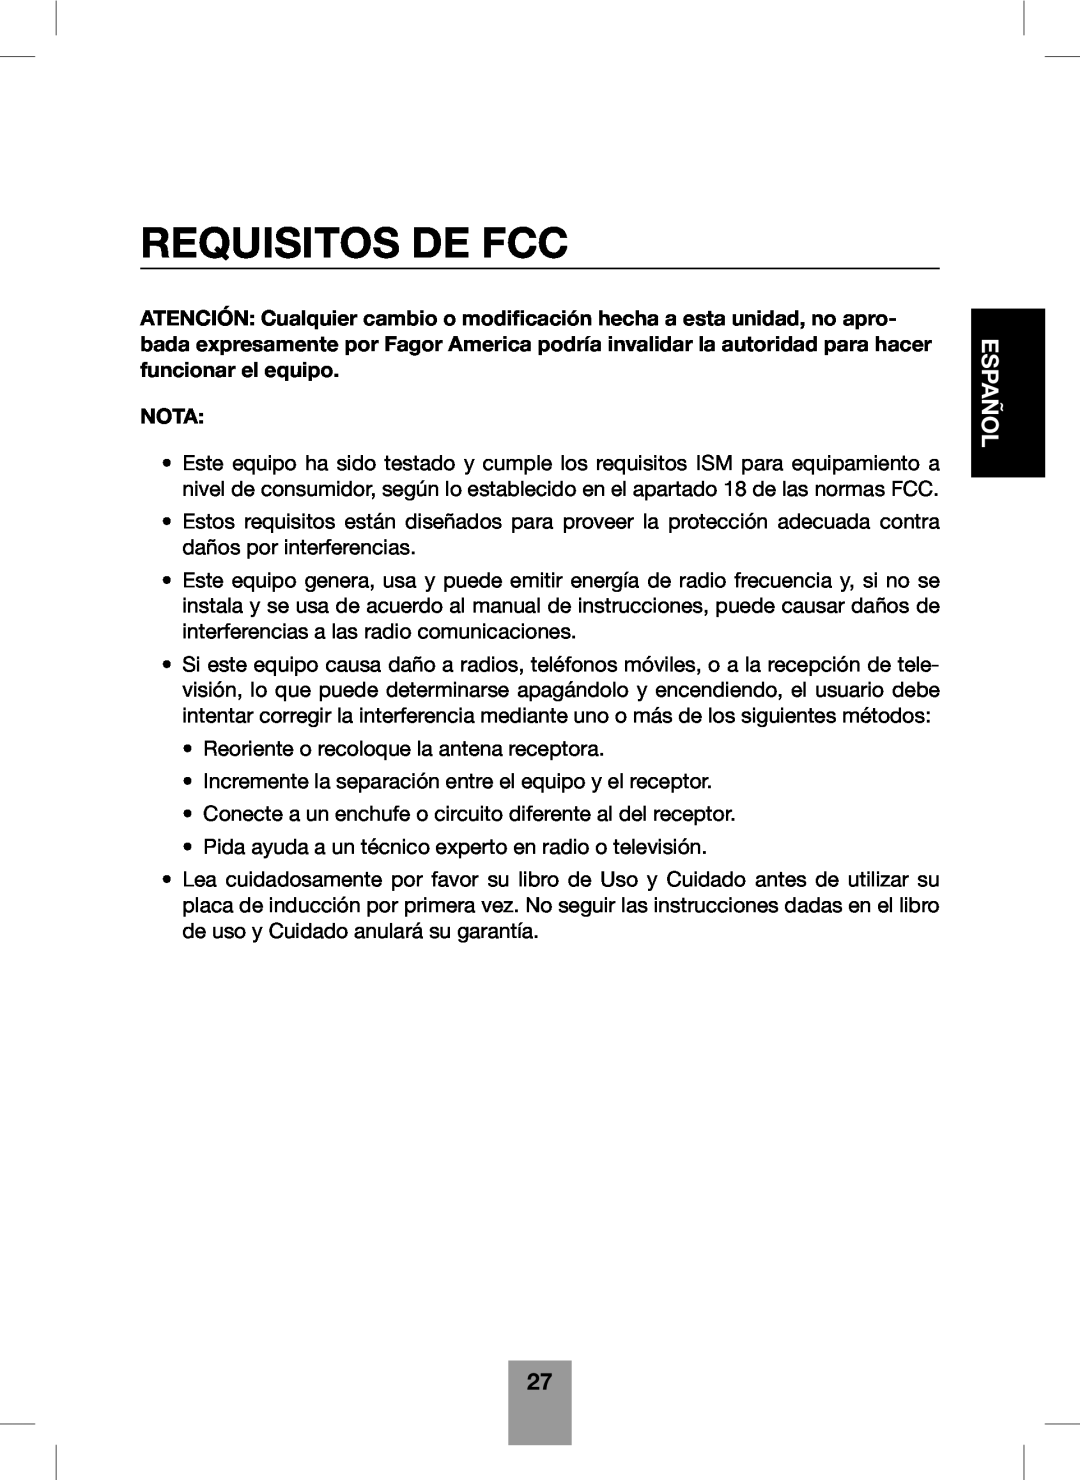 Fagor America Portable Induction Cooktop user manual Requisitos De Fcc, Español, Nota 